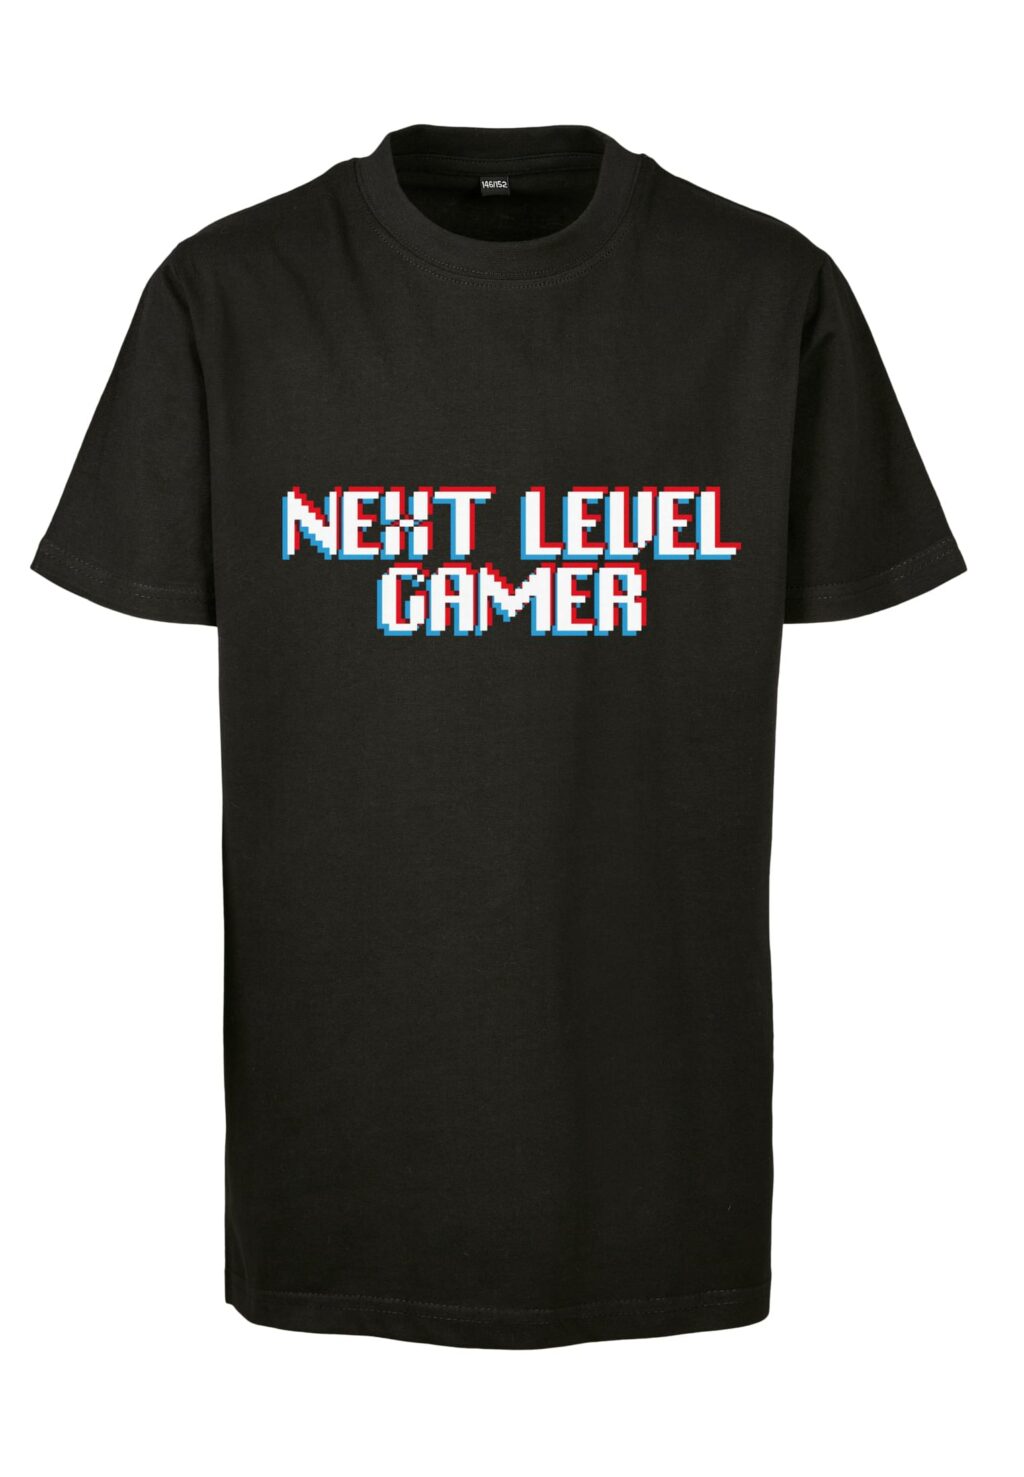 Kids Next Level Gamer Tee black MTK175